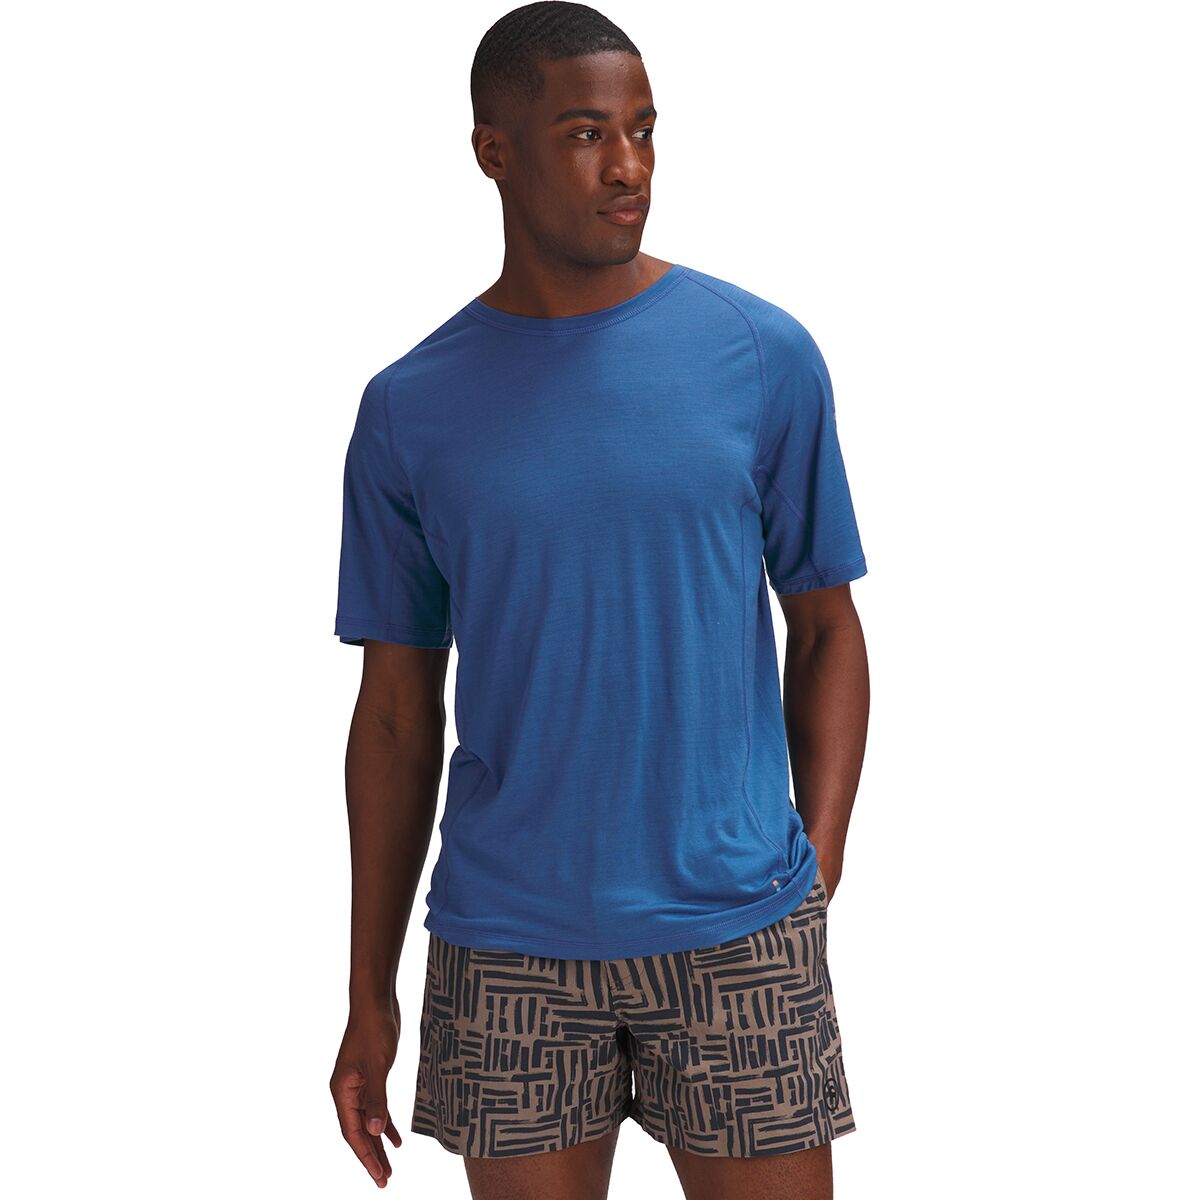 Smartwool Merino Sport 120 Short-Sleeve Shirt - Men's